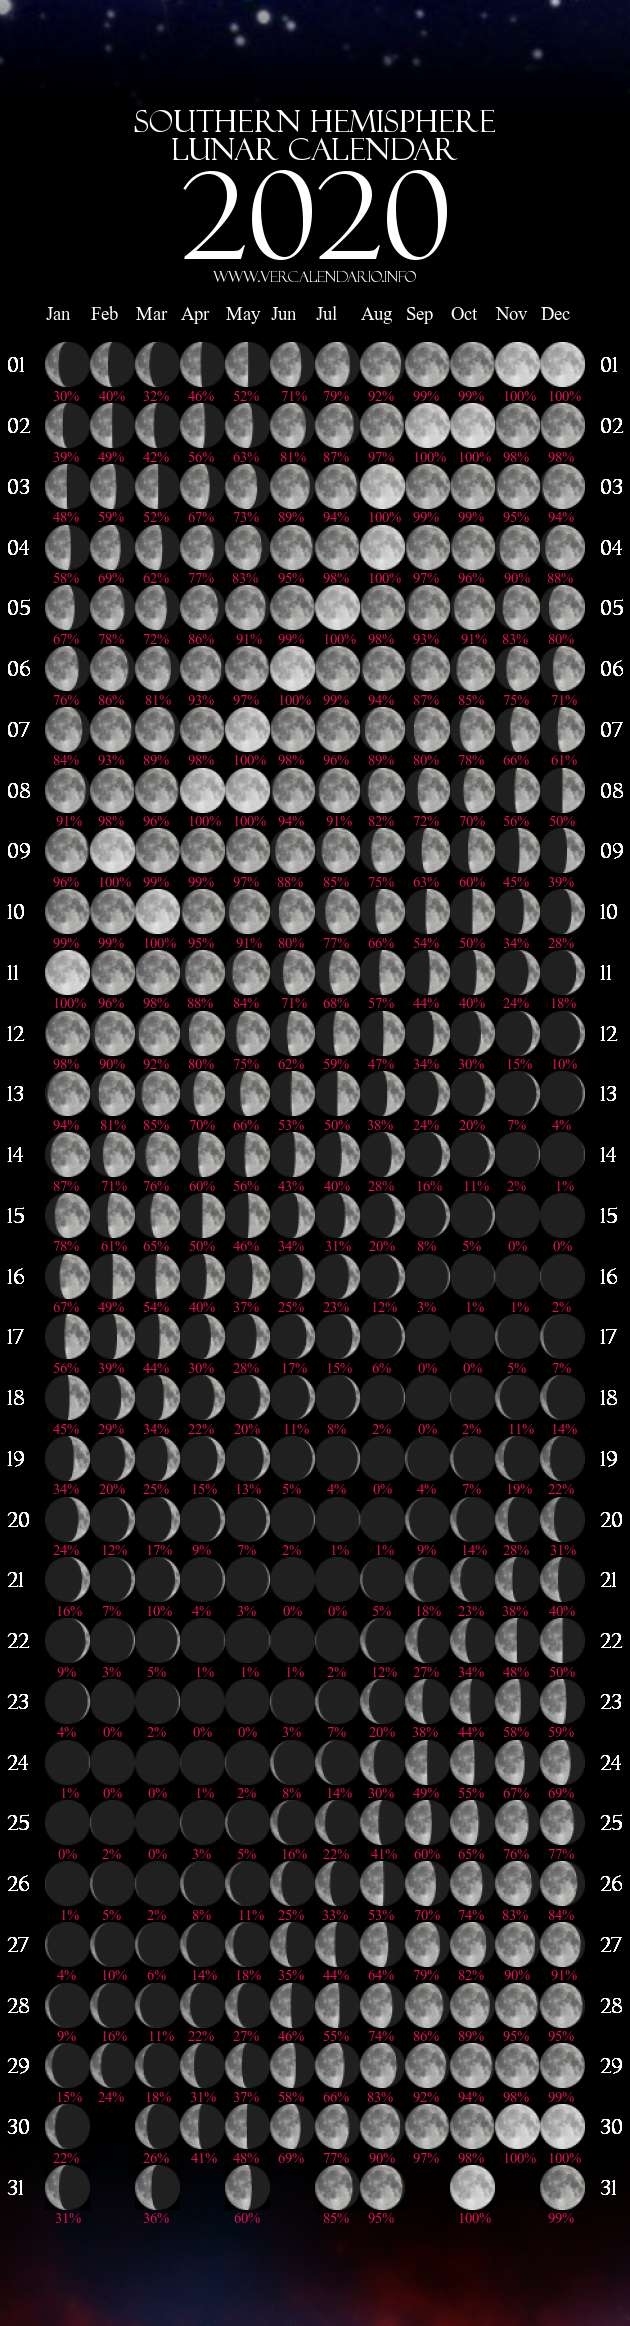 Lunar Calendar 2020 (Southern Hemisphere) Lunar Hair Cutting Chart 2021 Morrocco